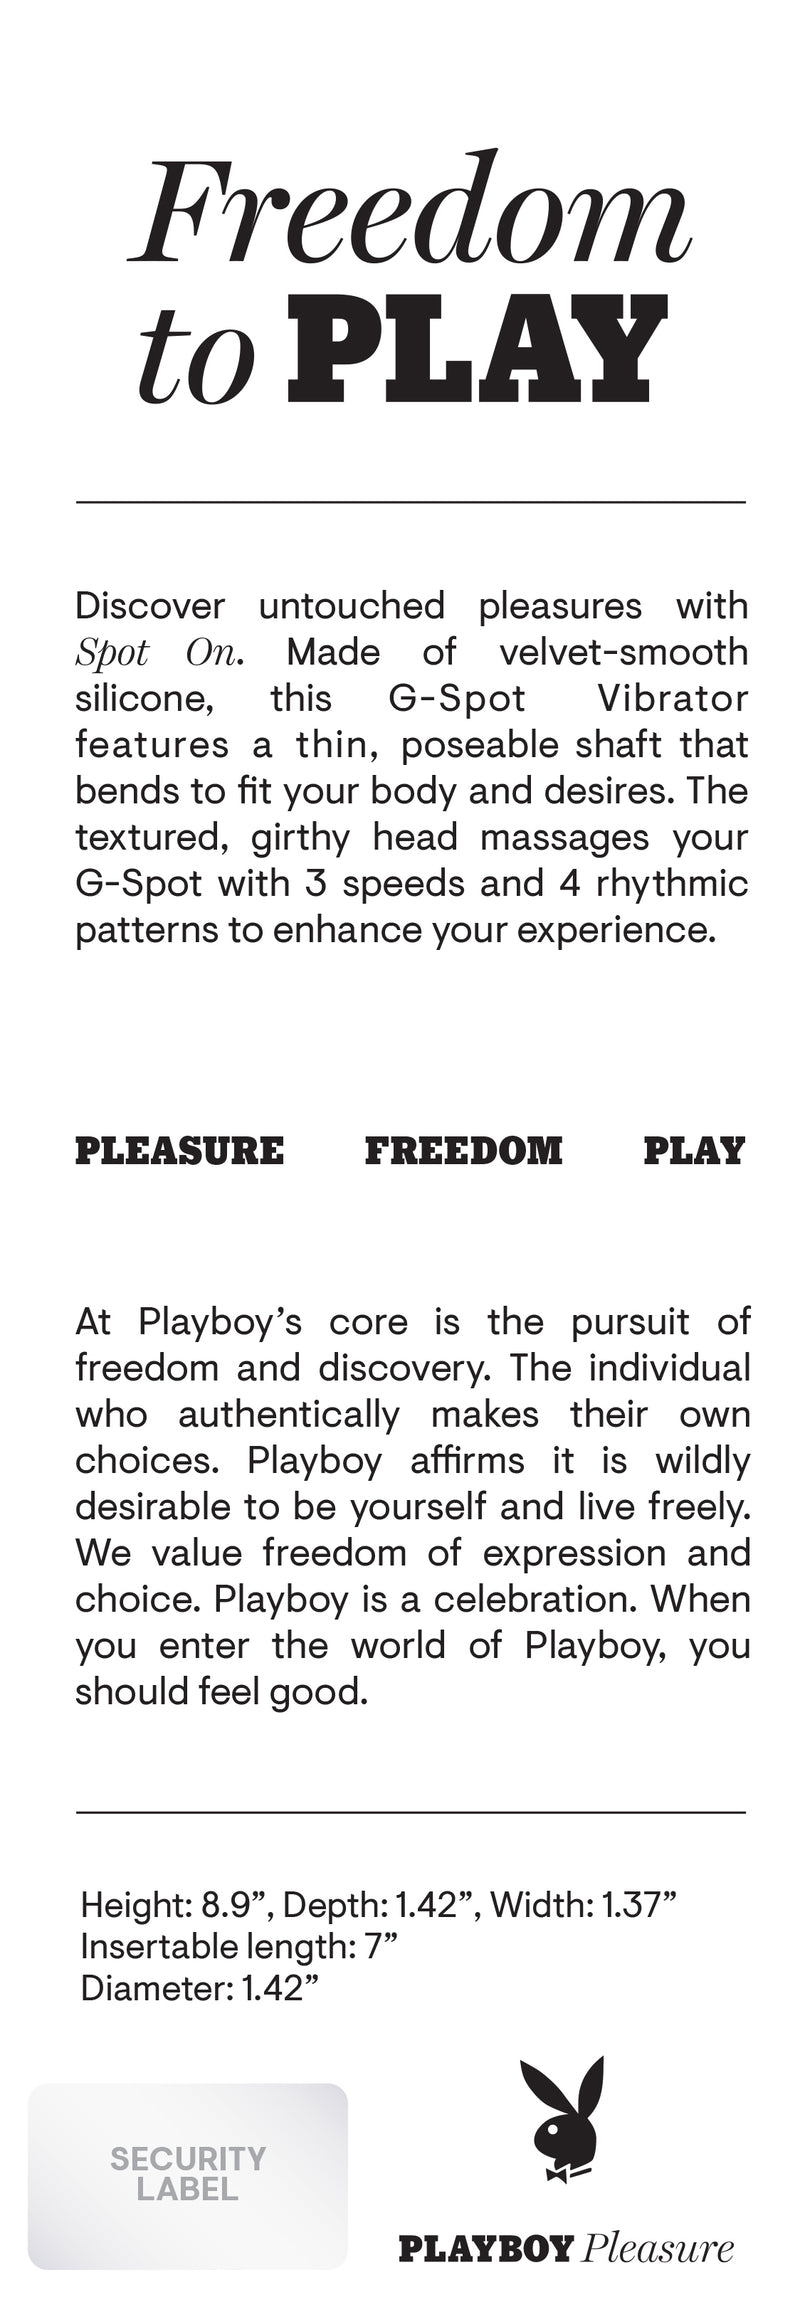 Spot On - Playboy Pleasure